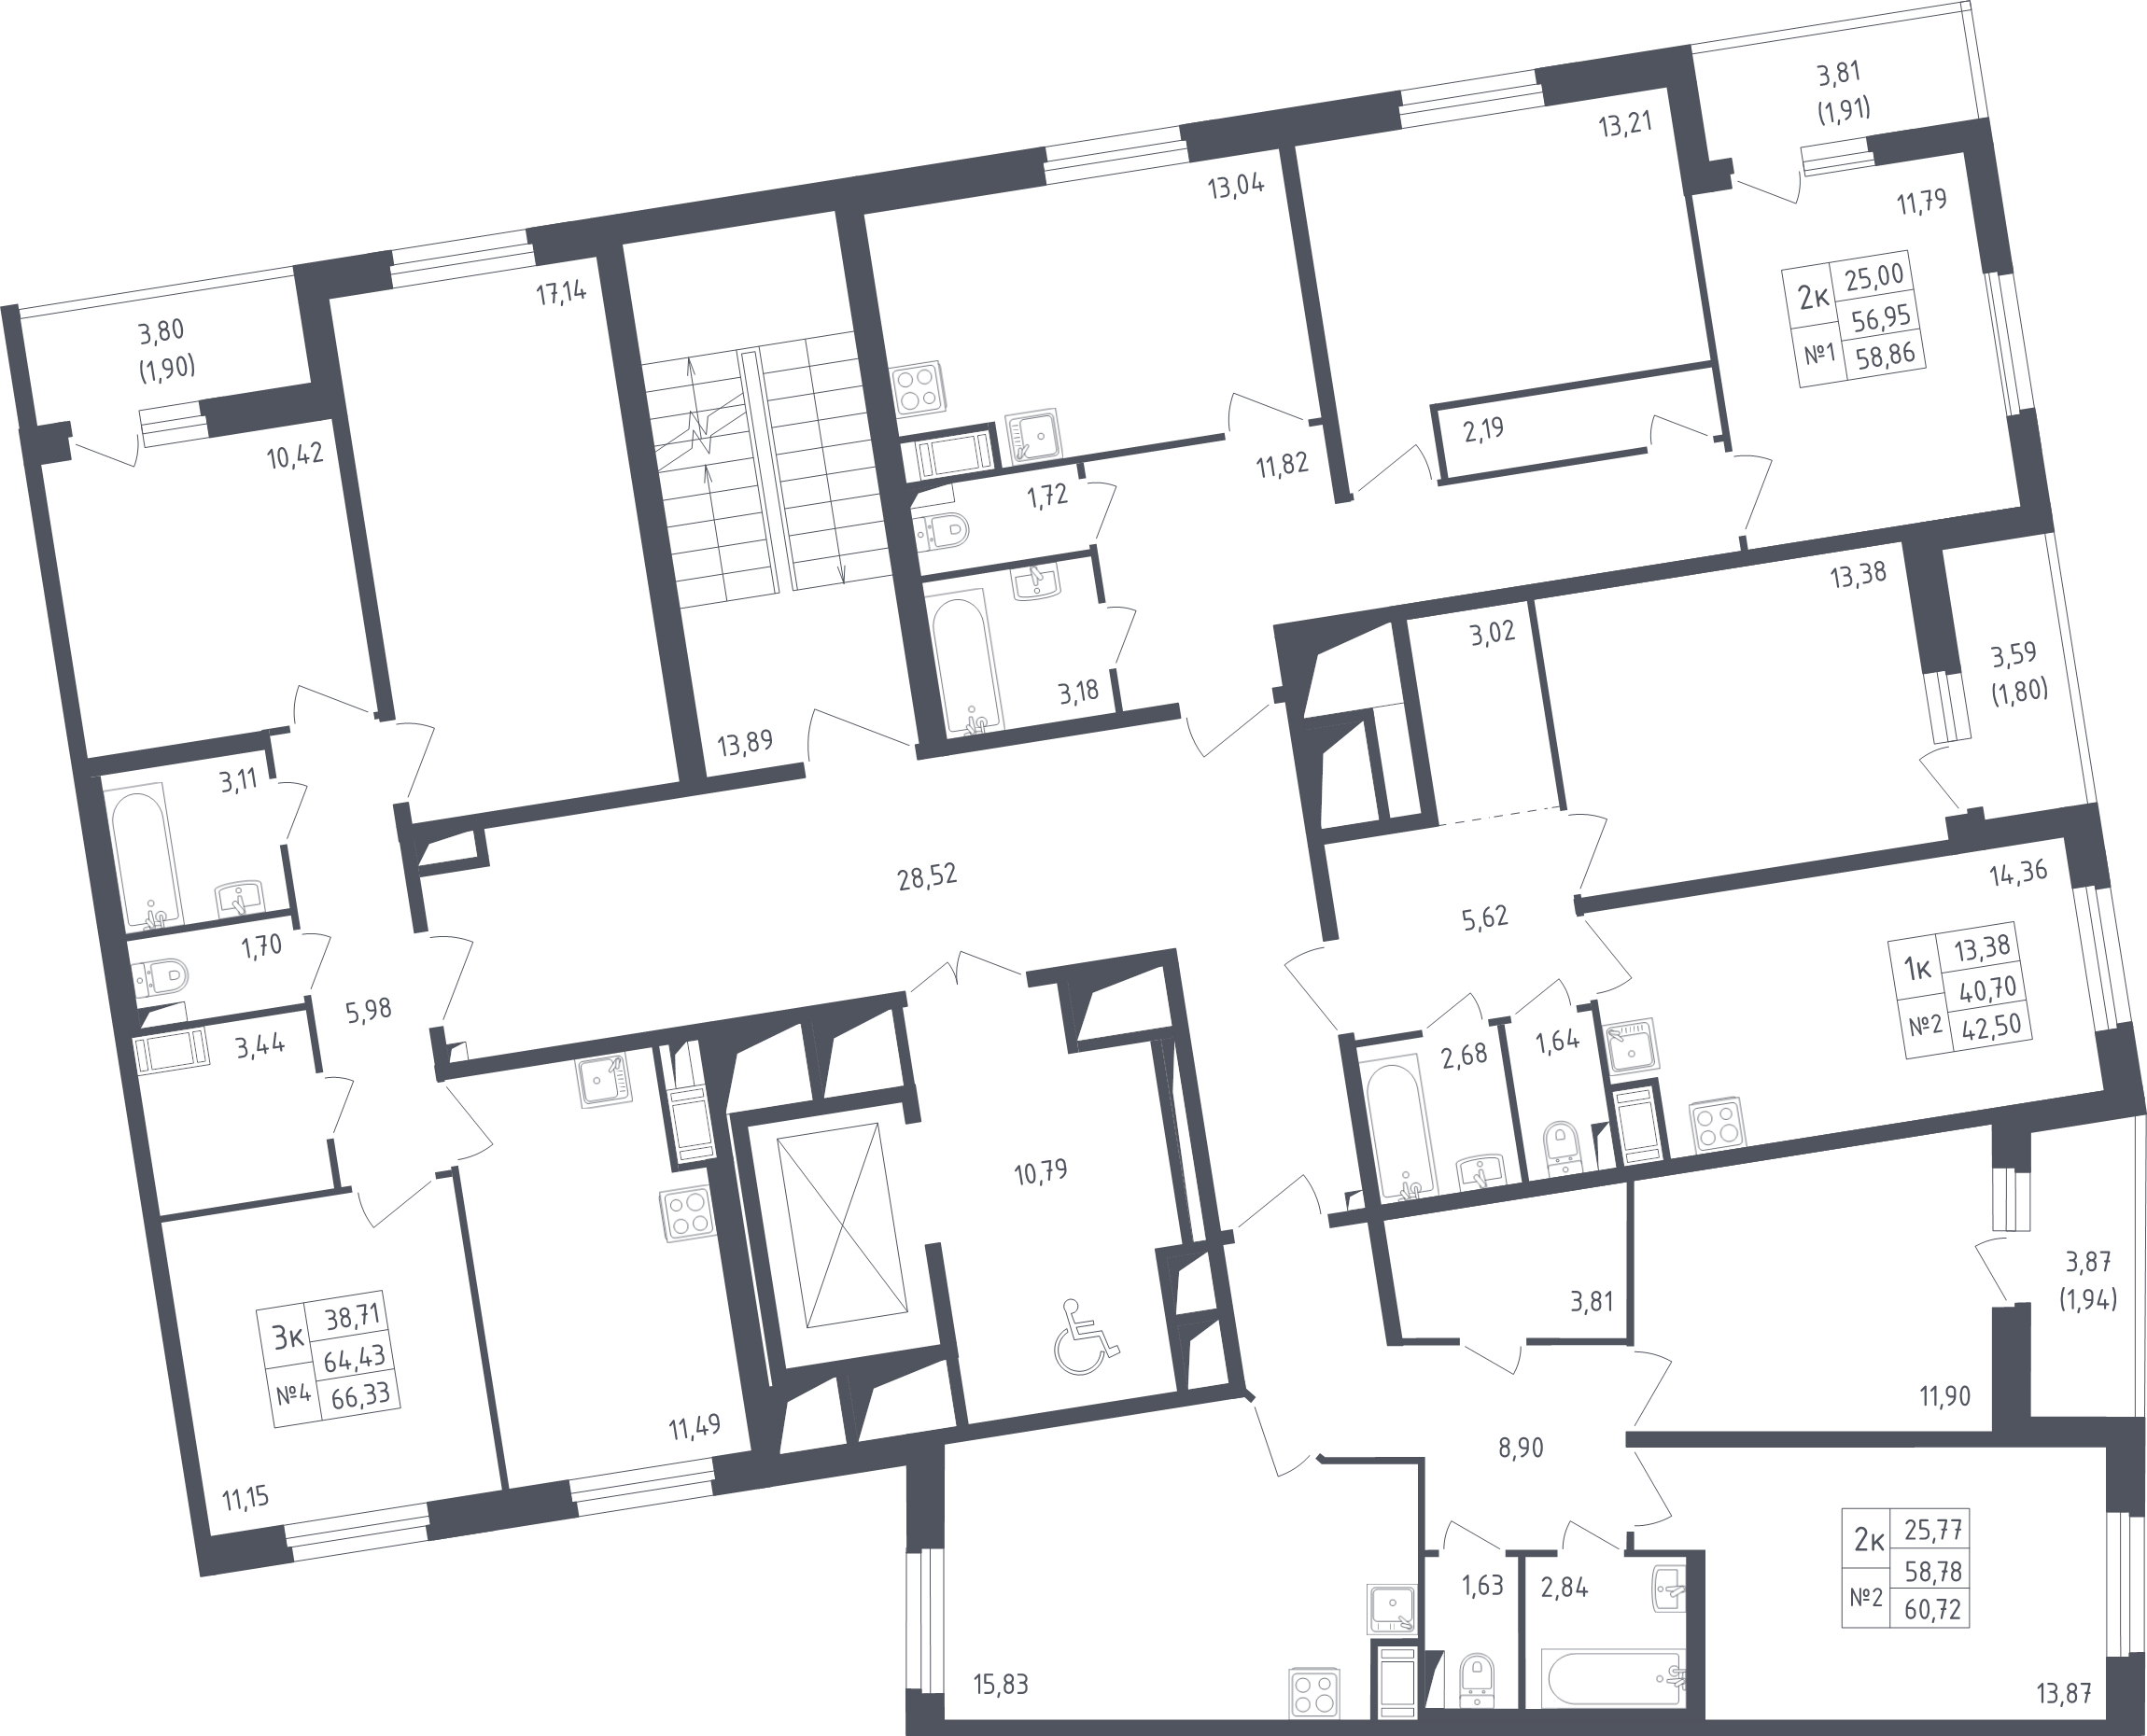 3-комнатная (Евро) квартира, 60.72 м² в ЖК "Астрид" - планировка этажа